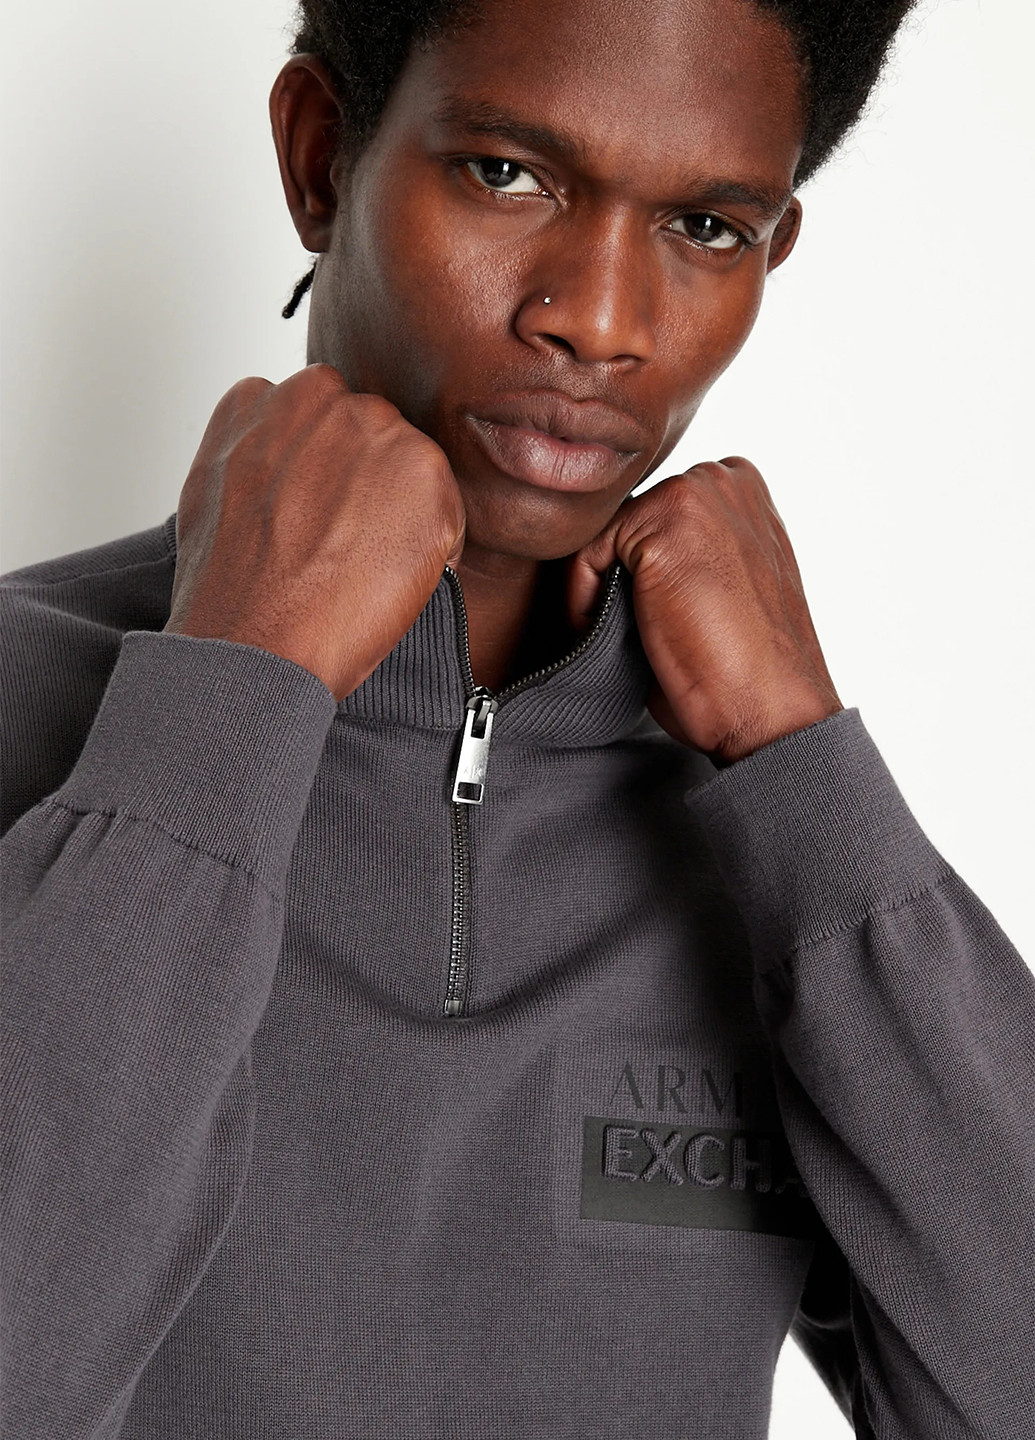 Серый демисезонный свитер джемпер Armani Exchange